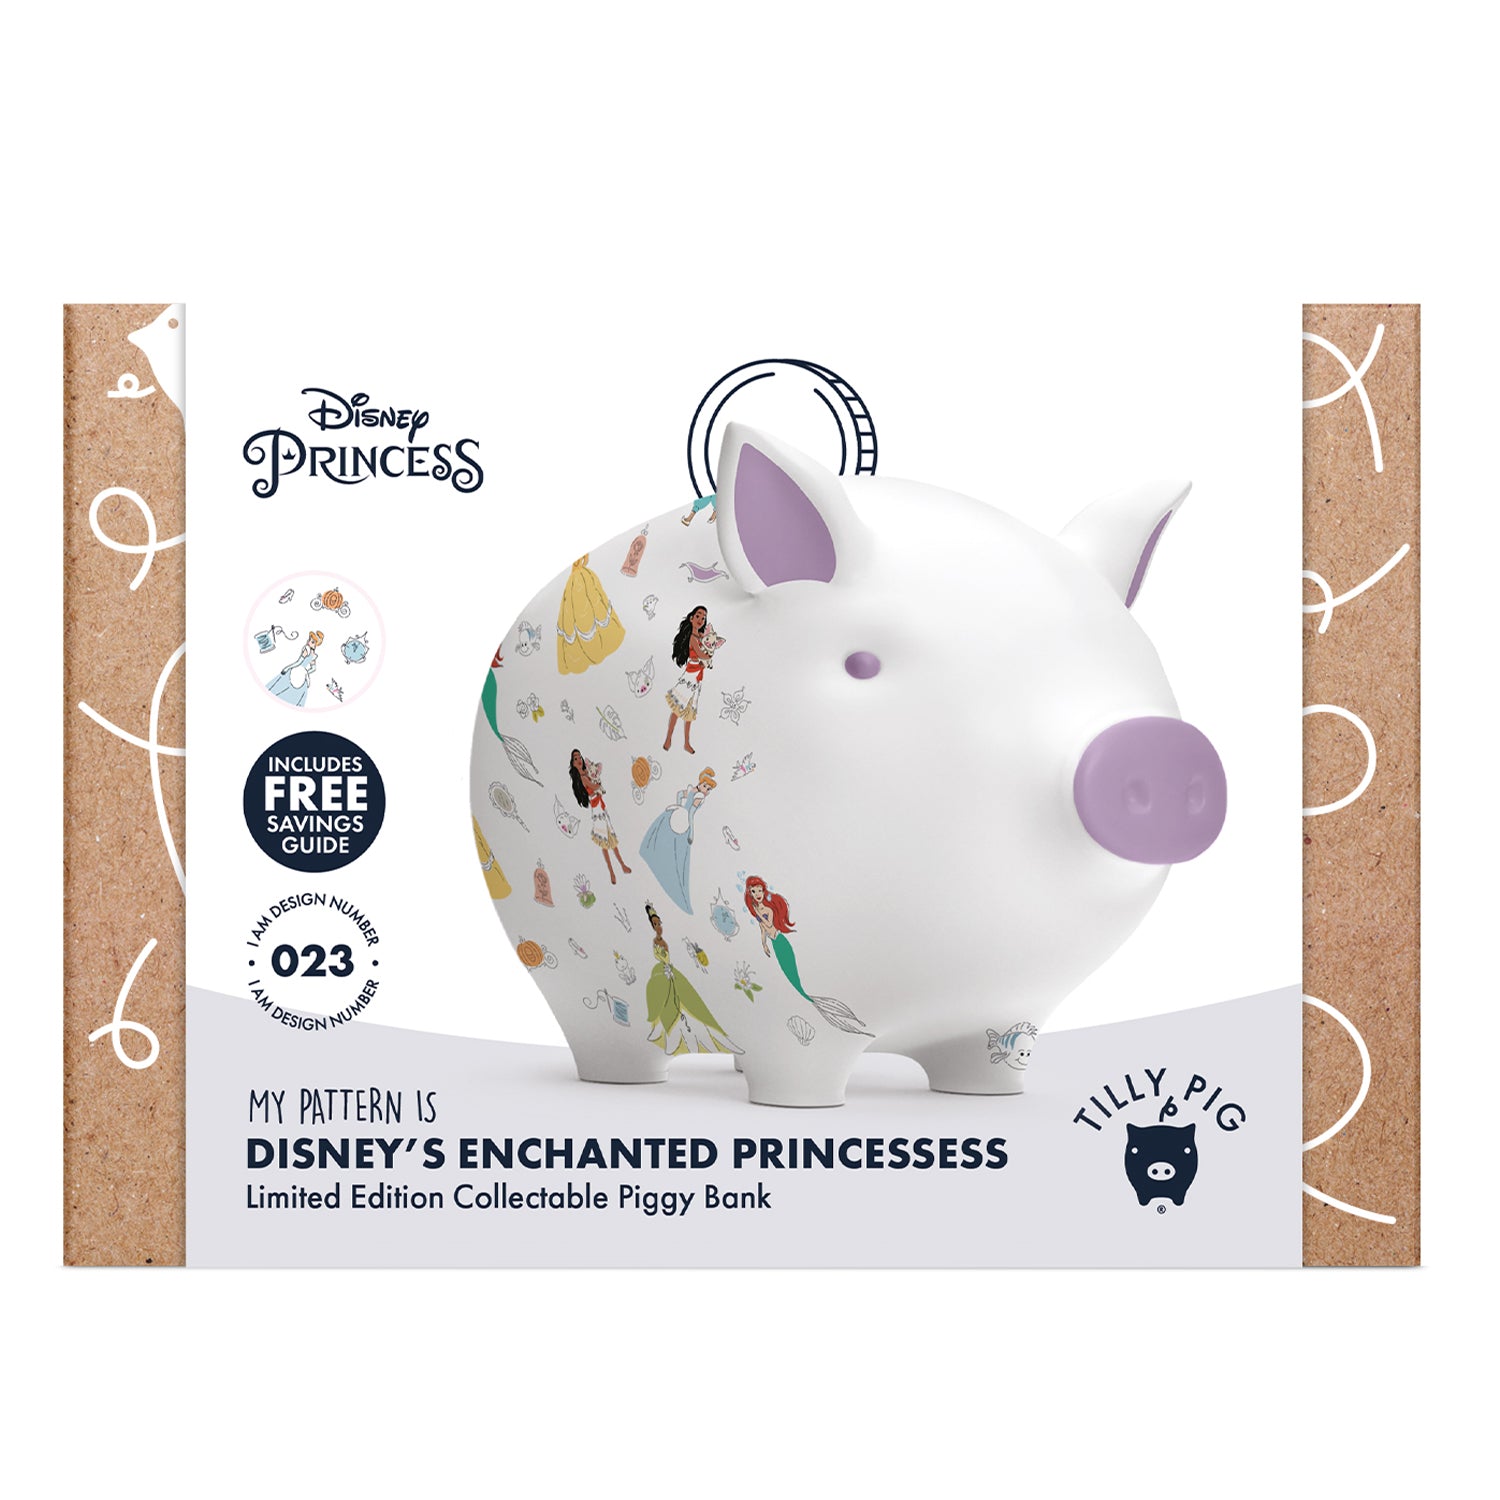 Disney's Enchanted Princesses Piggy Bank